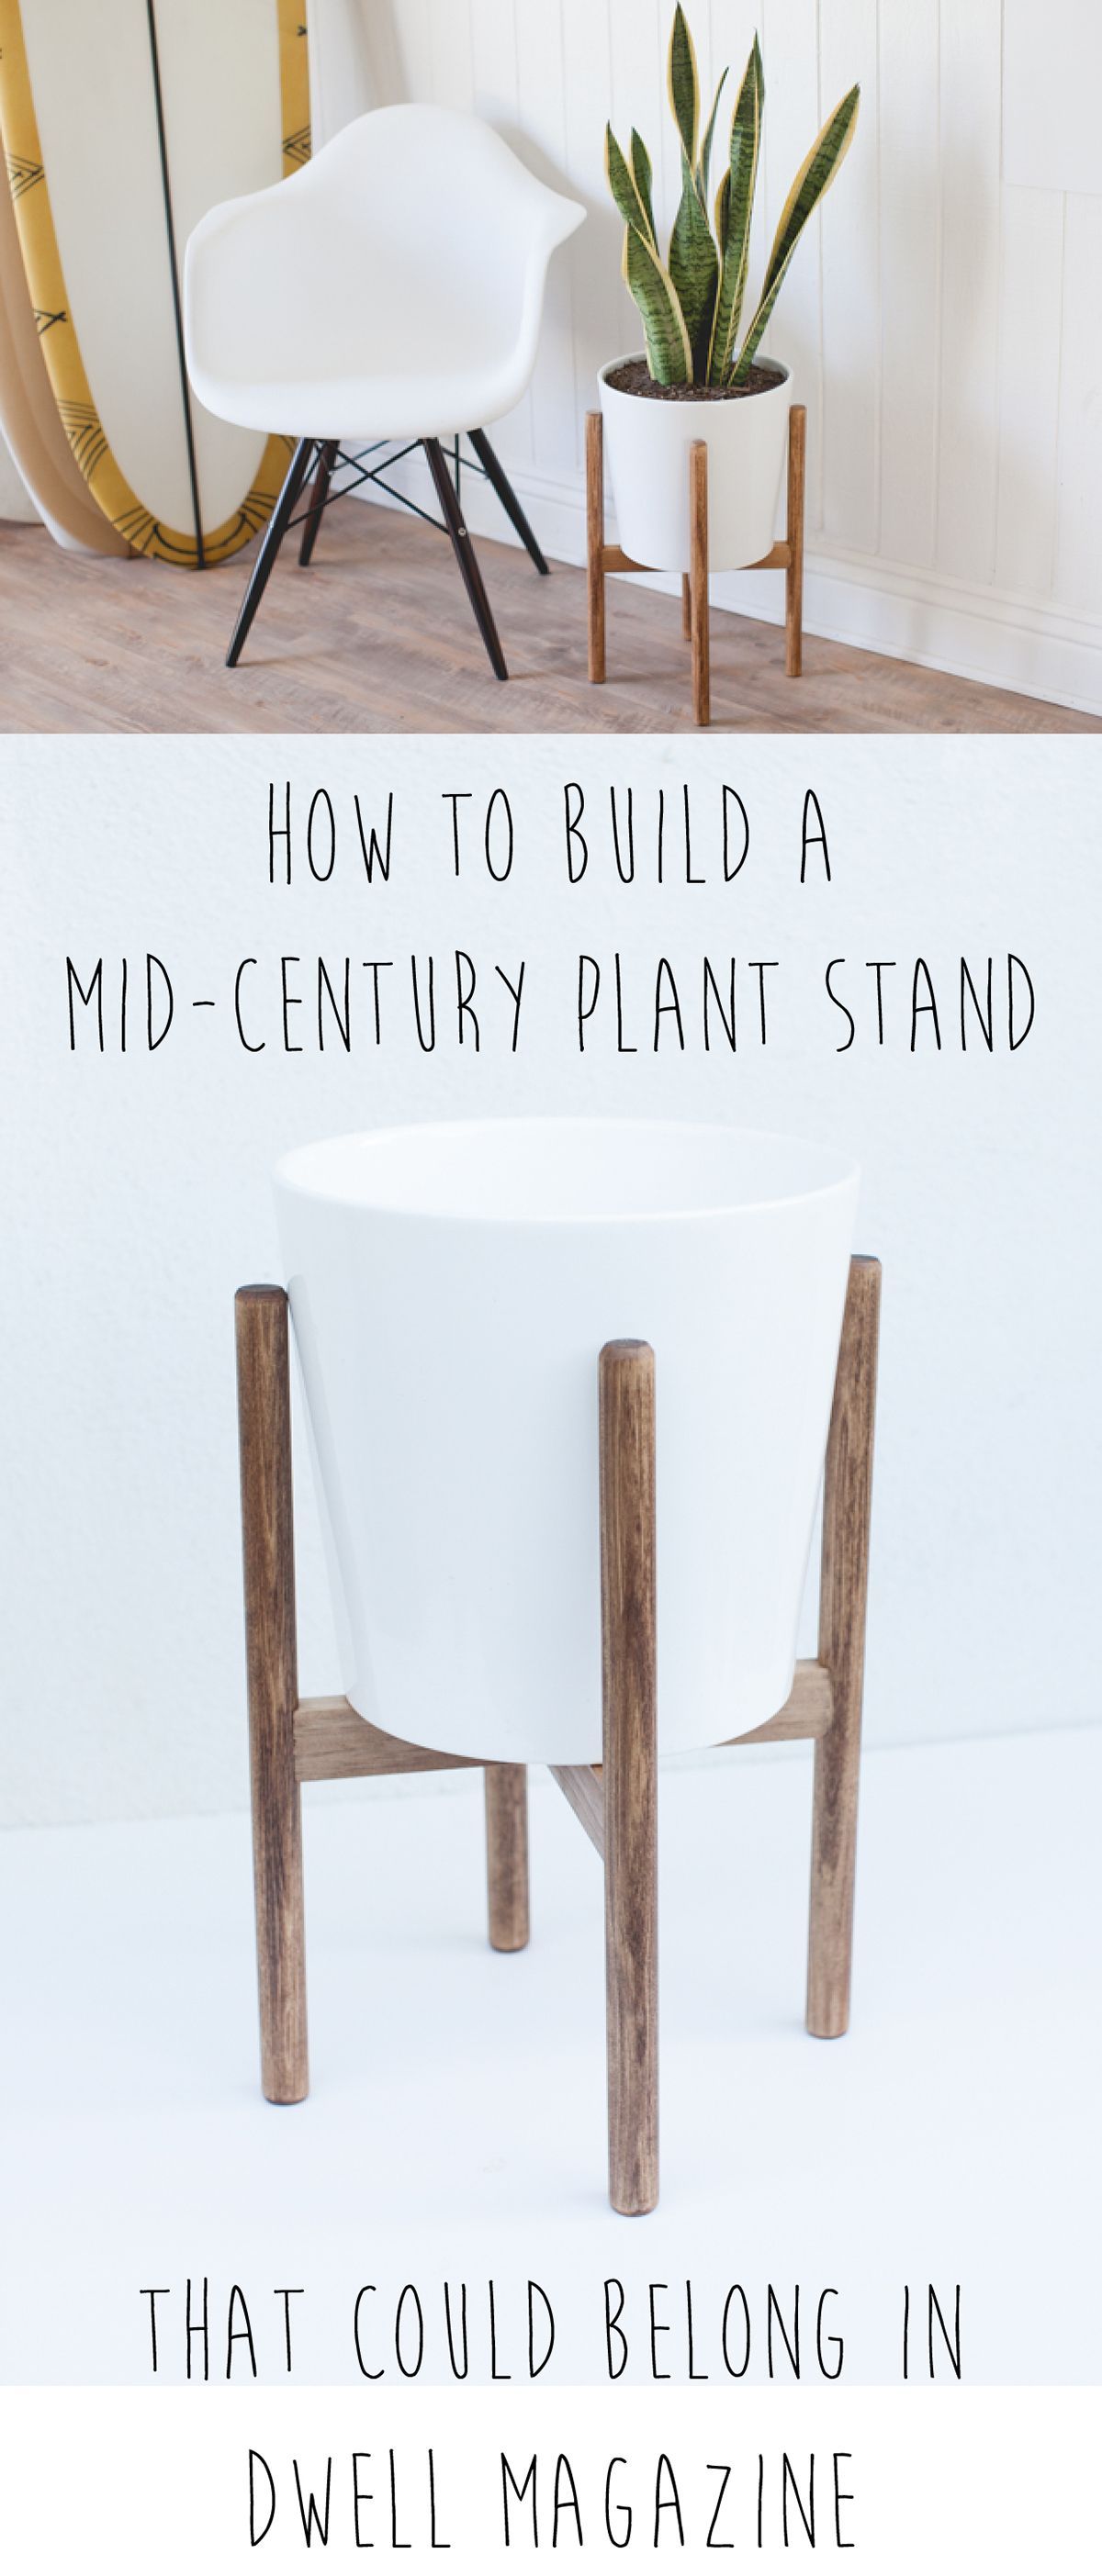 14 modern plants Stand ideas